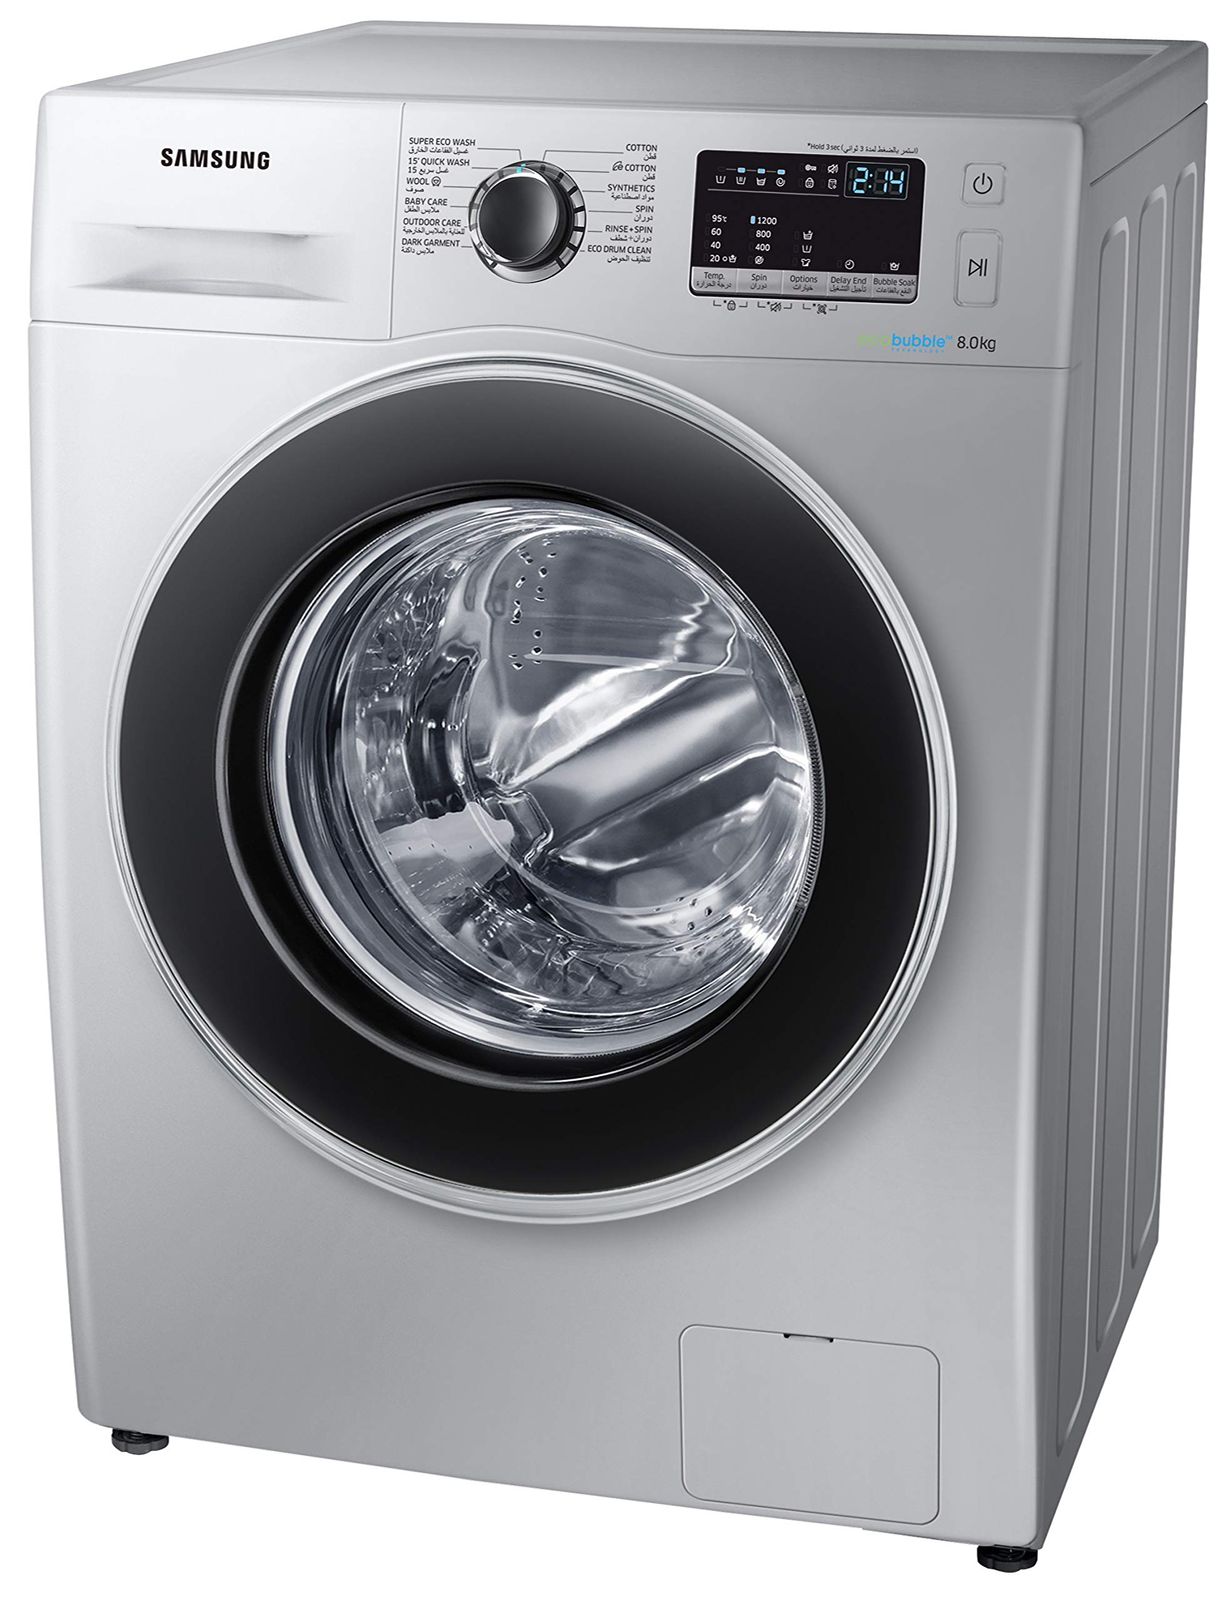 Samsung Automatic Washing Machine Repairing Services